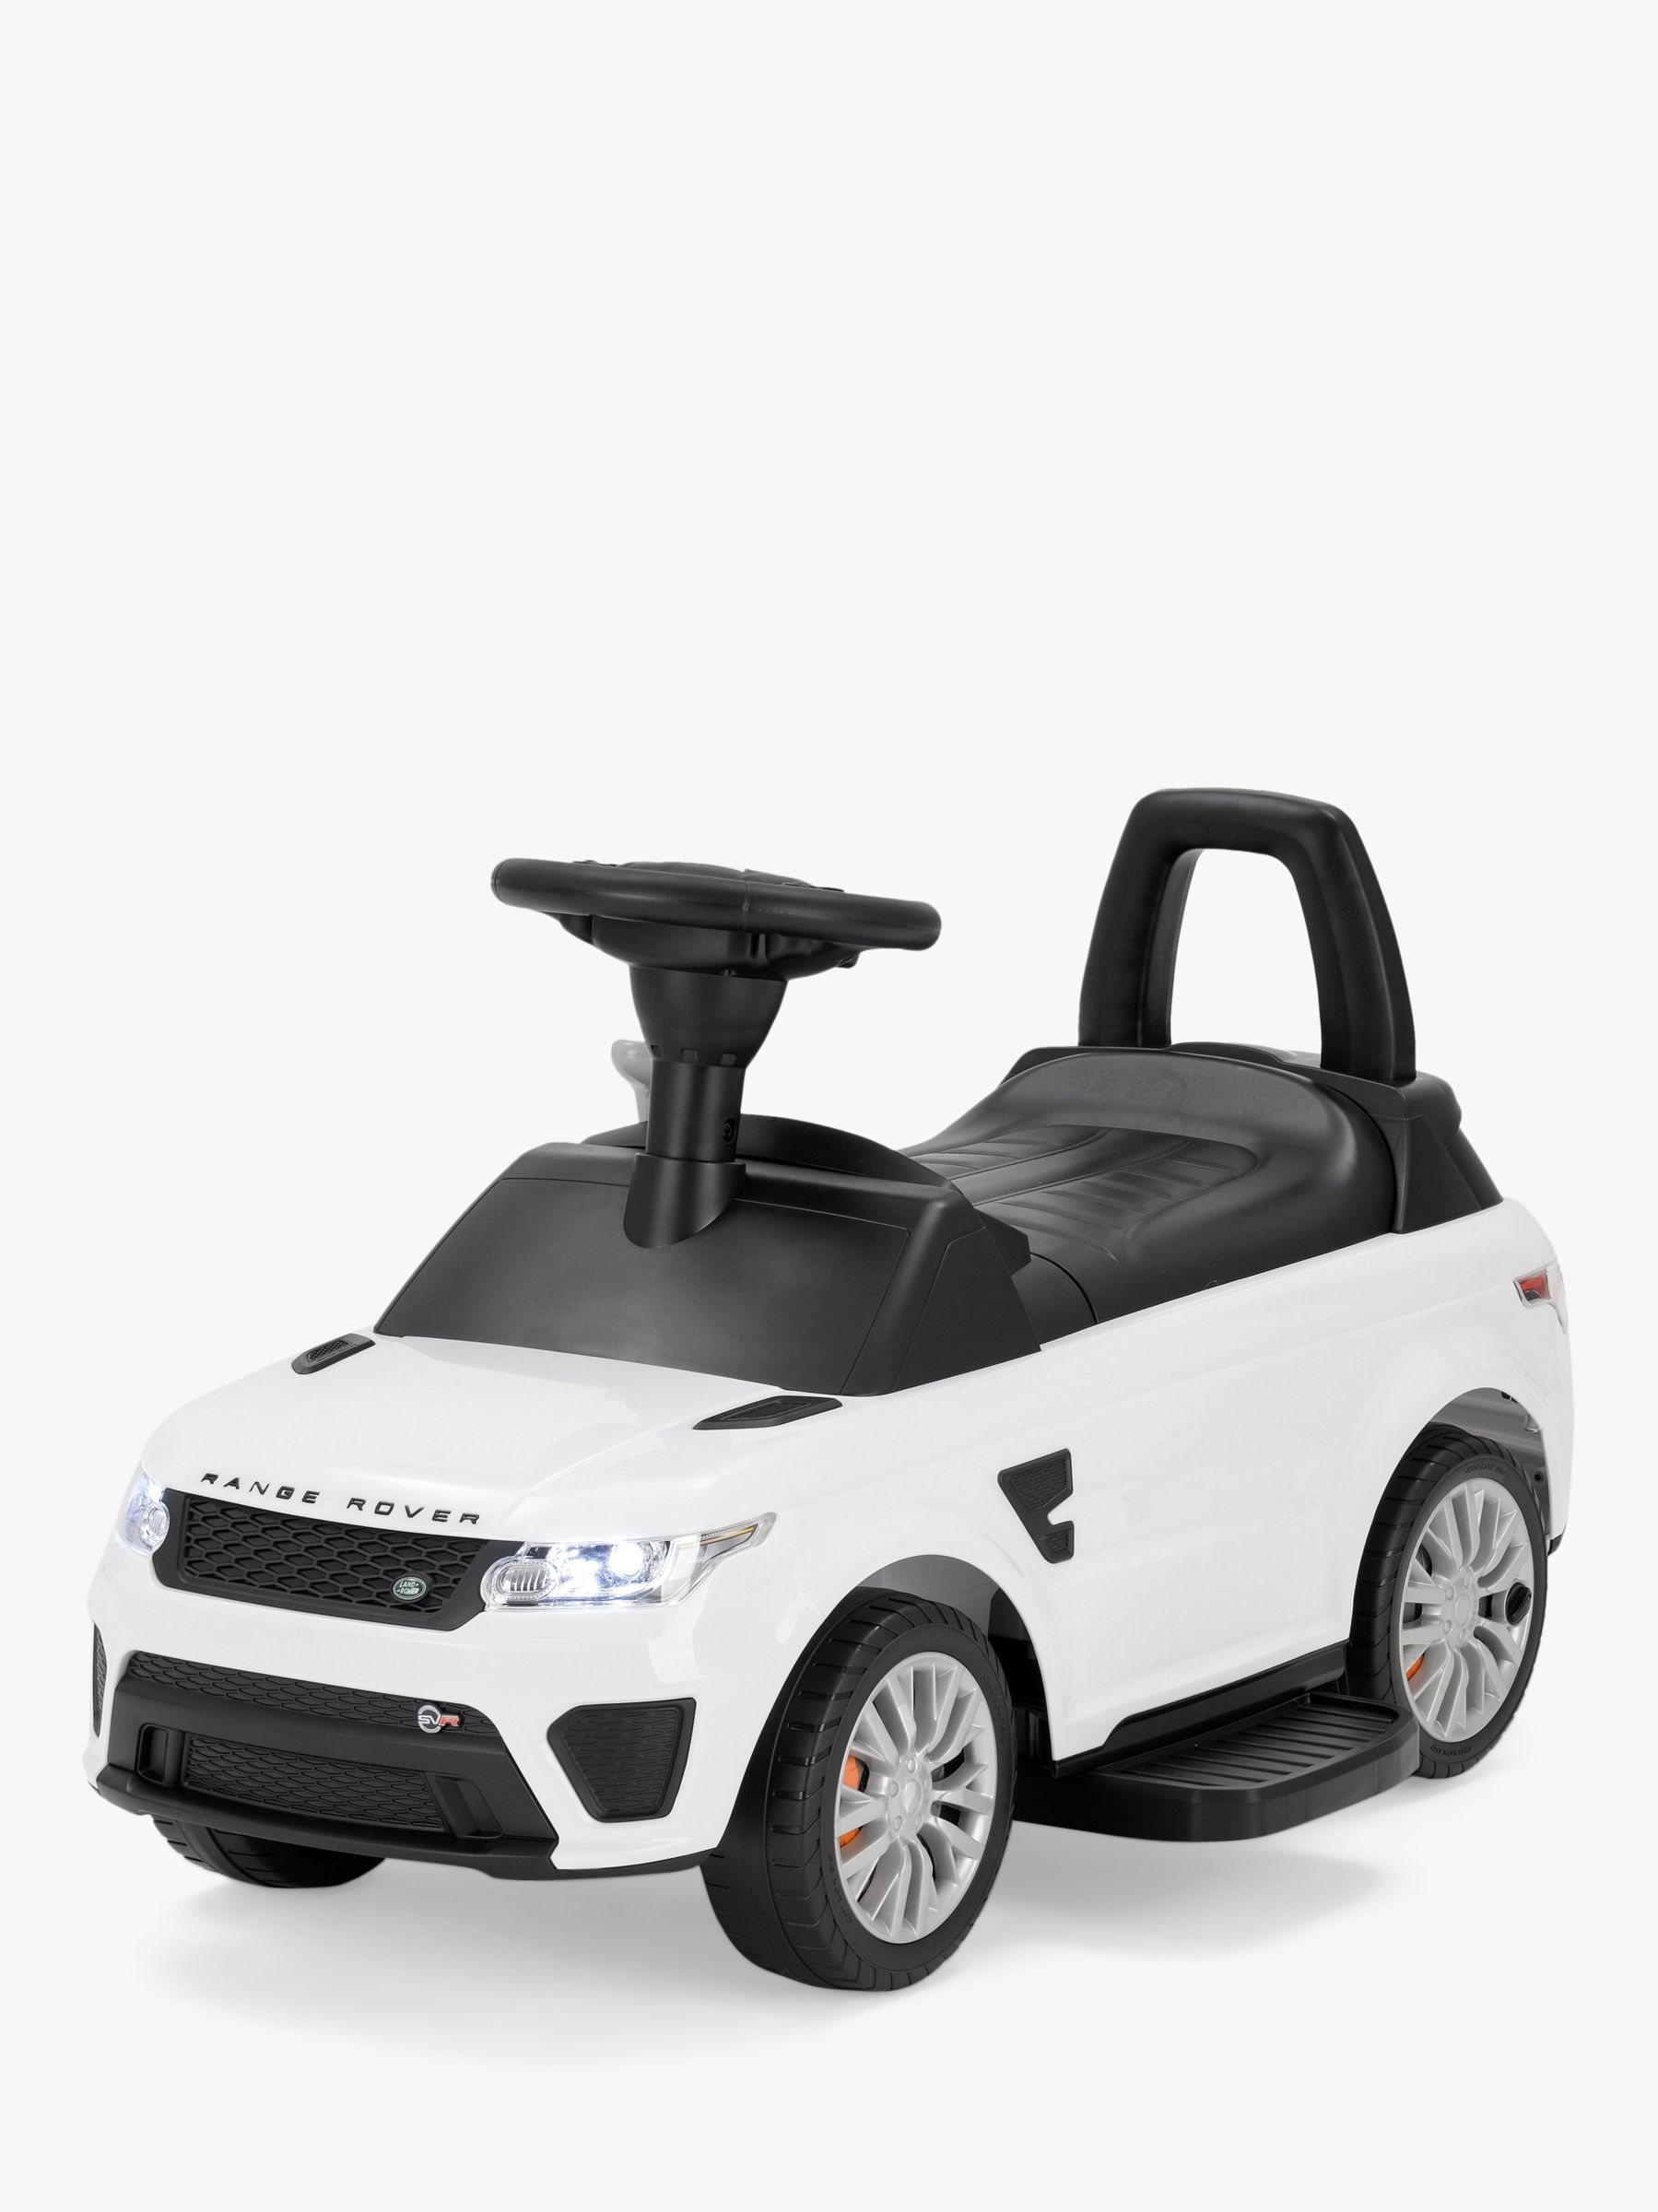 range rover toys cars